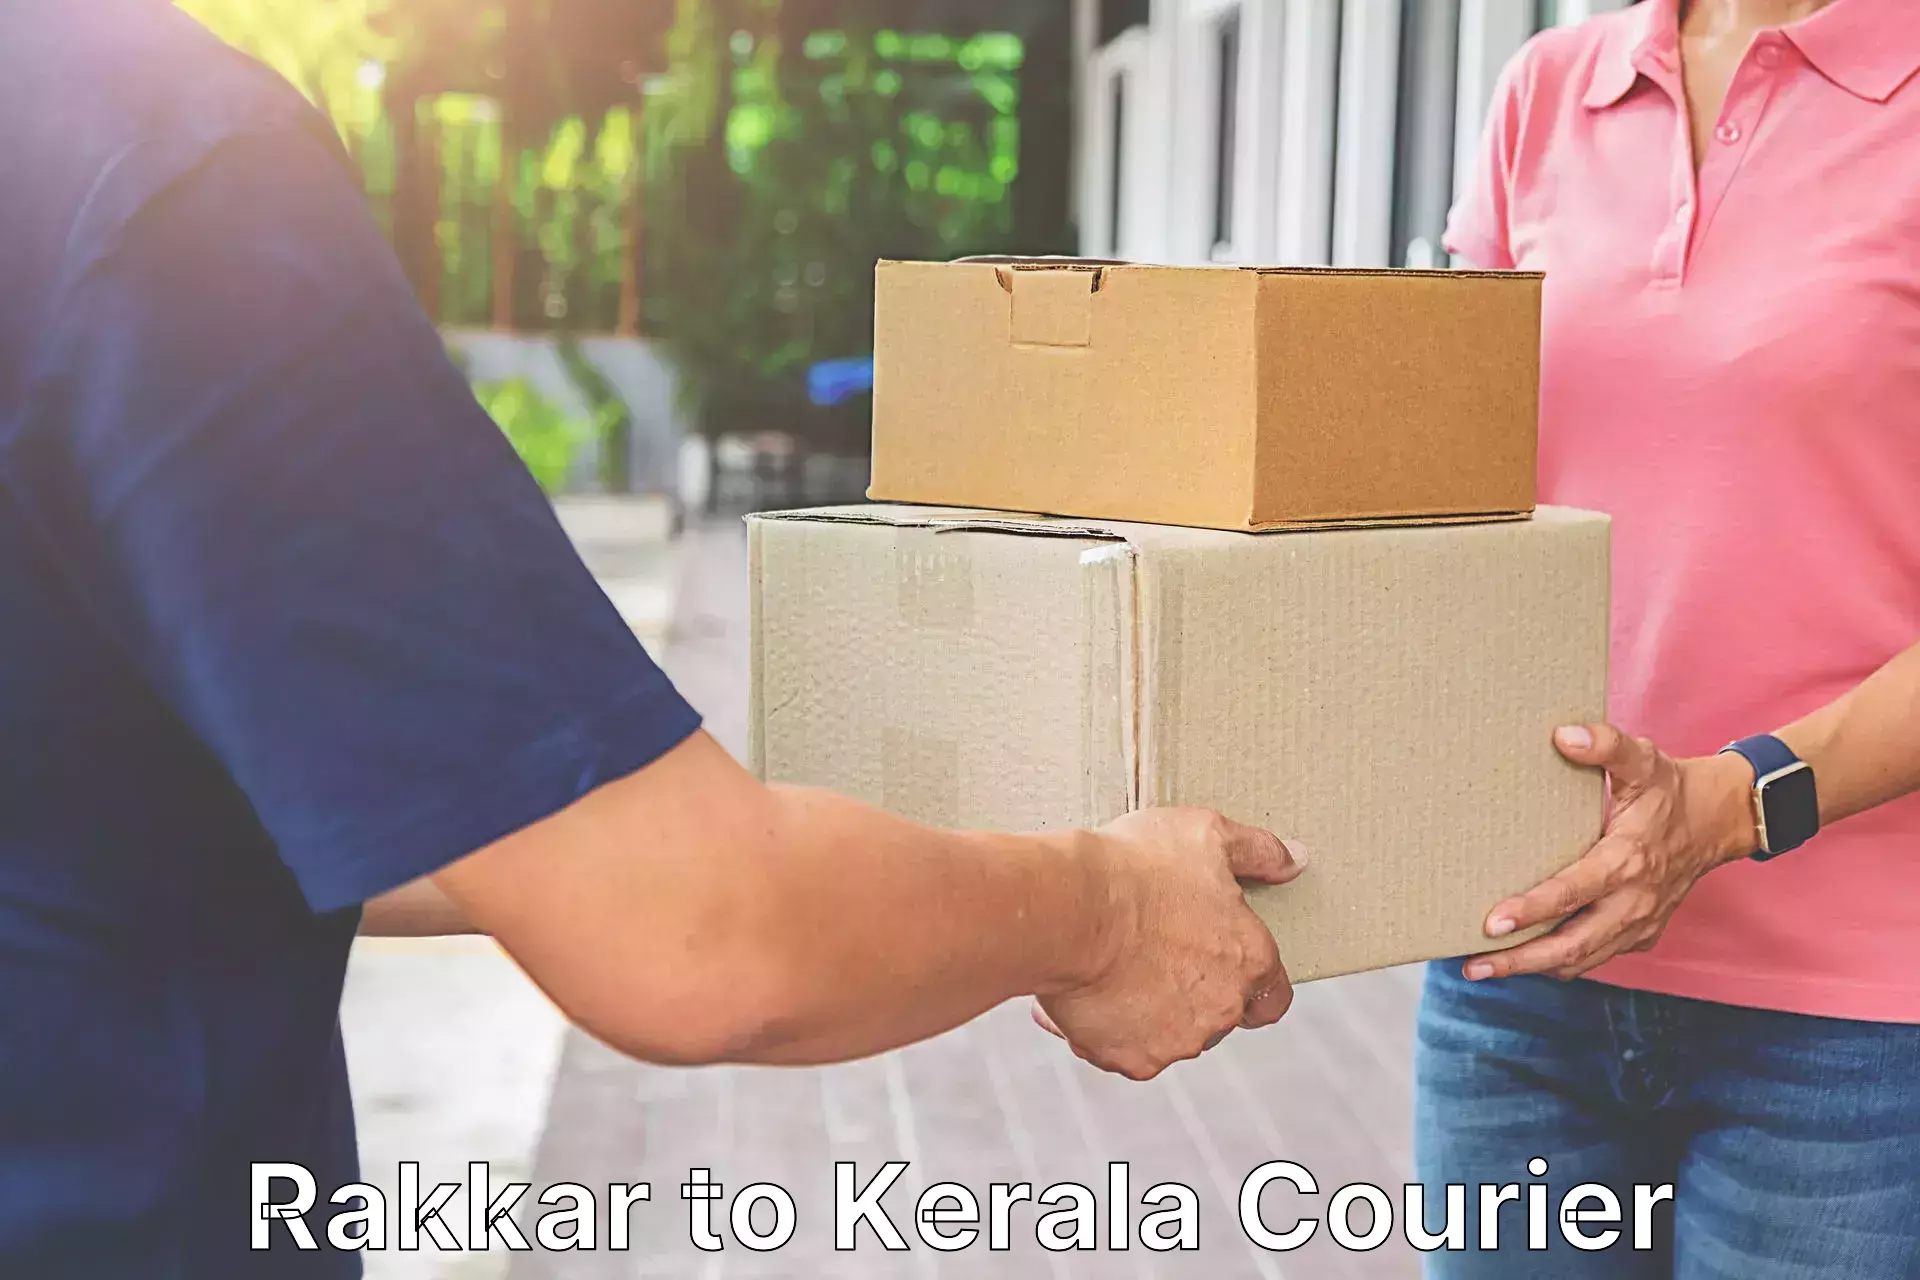 Personalized courier experiences Rakkar to Kerala